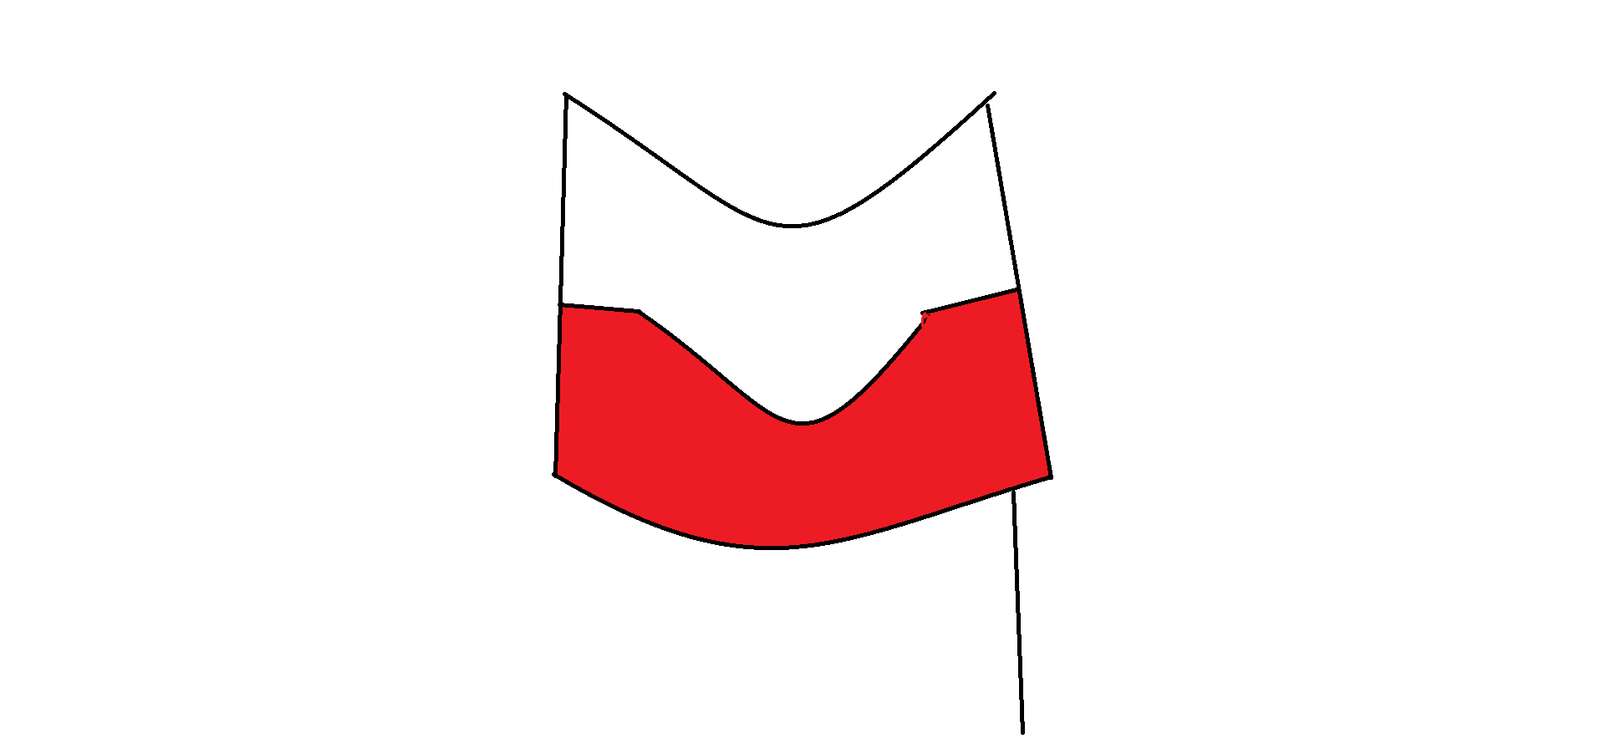 FLAGA POLSKI puzzle online